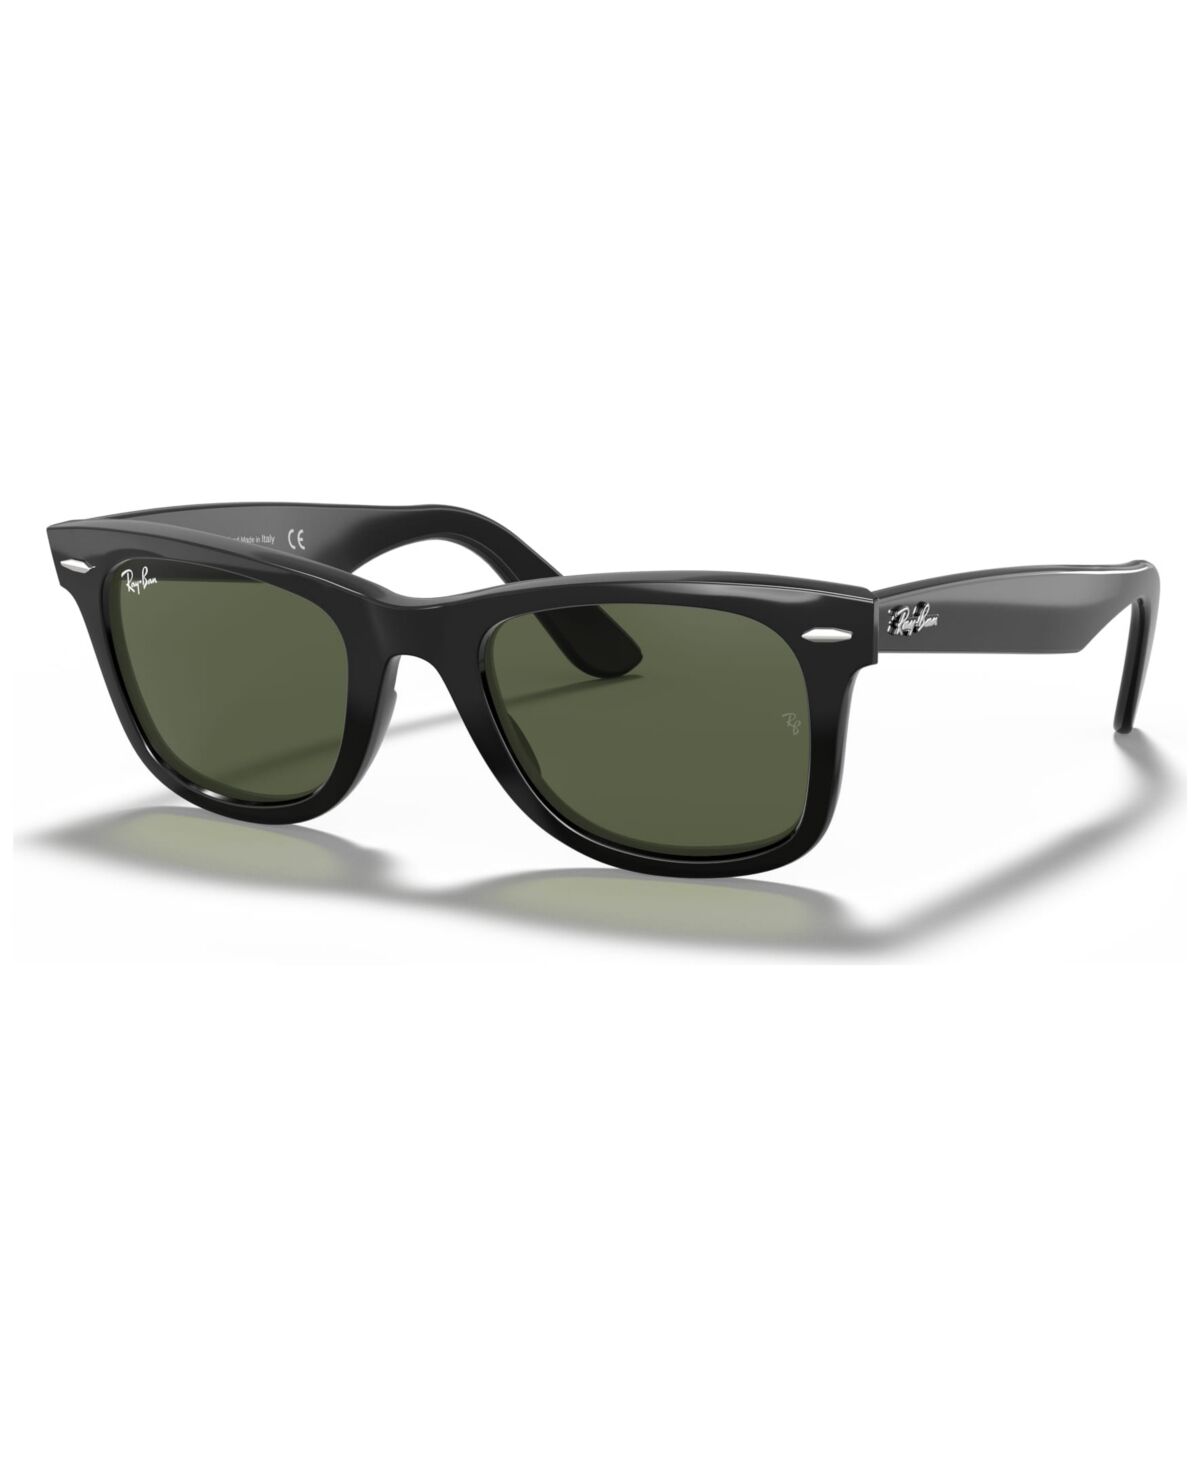 Ray-Ban Unisex Sunglasses, RB2140 Original Wayfarer - Polished Black/Green